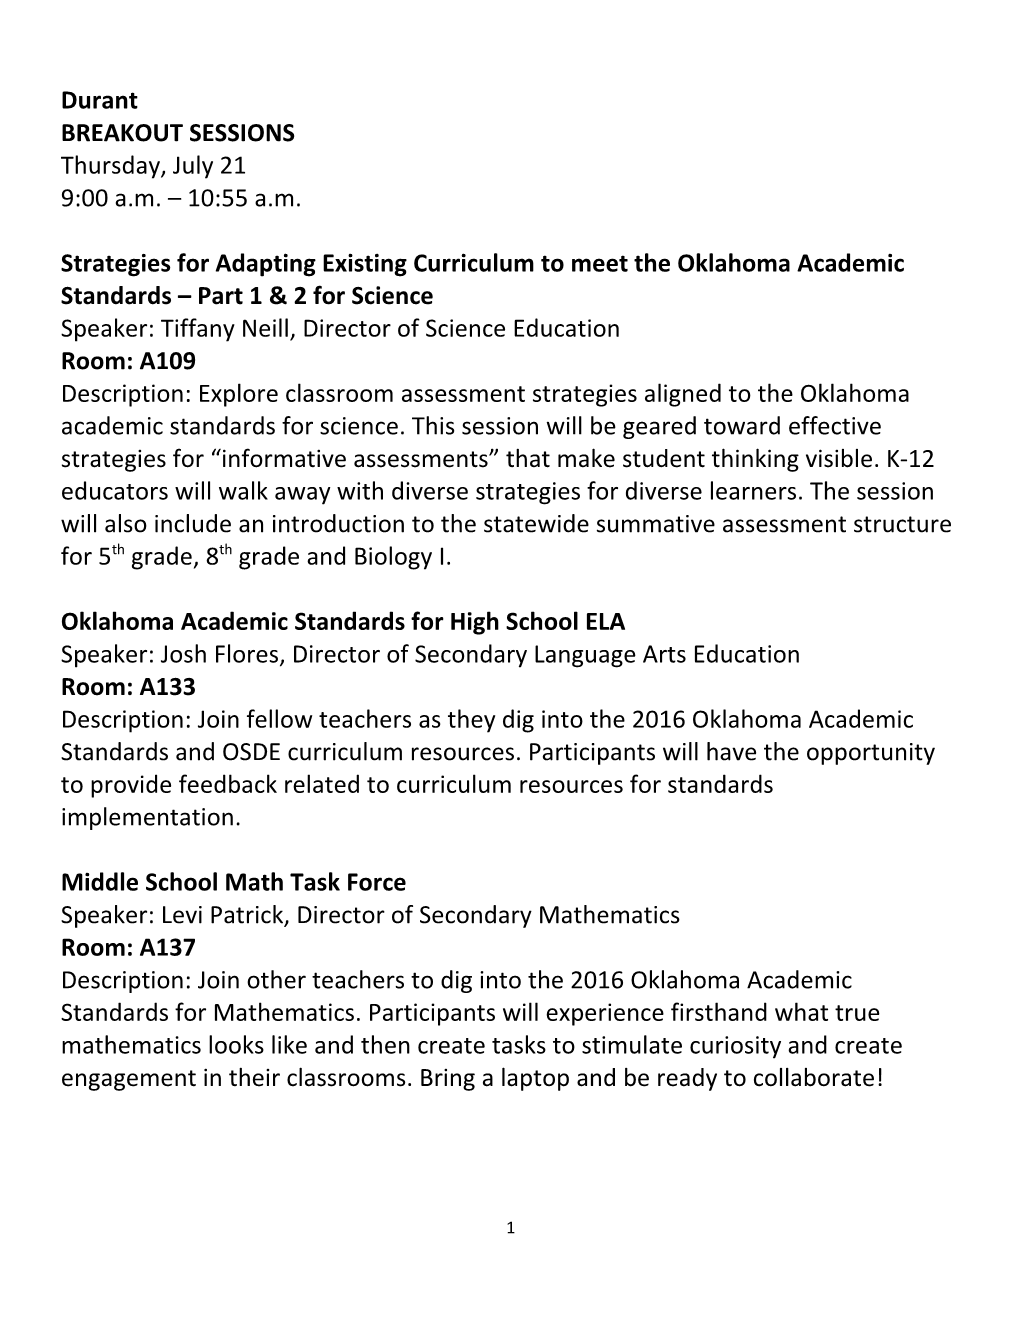 Oklahoma Academic Standards for High School ELA